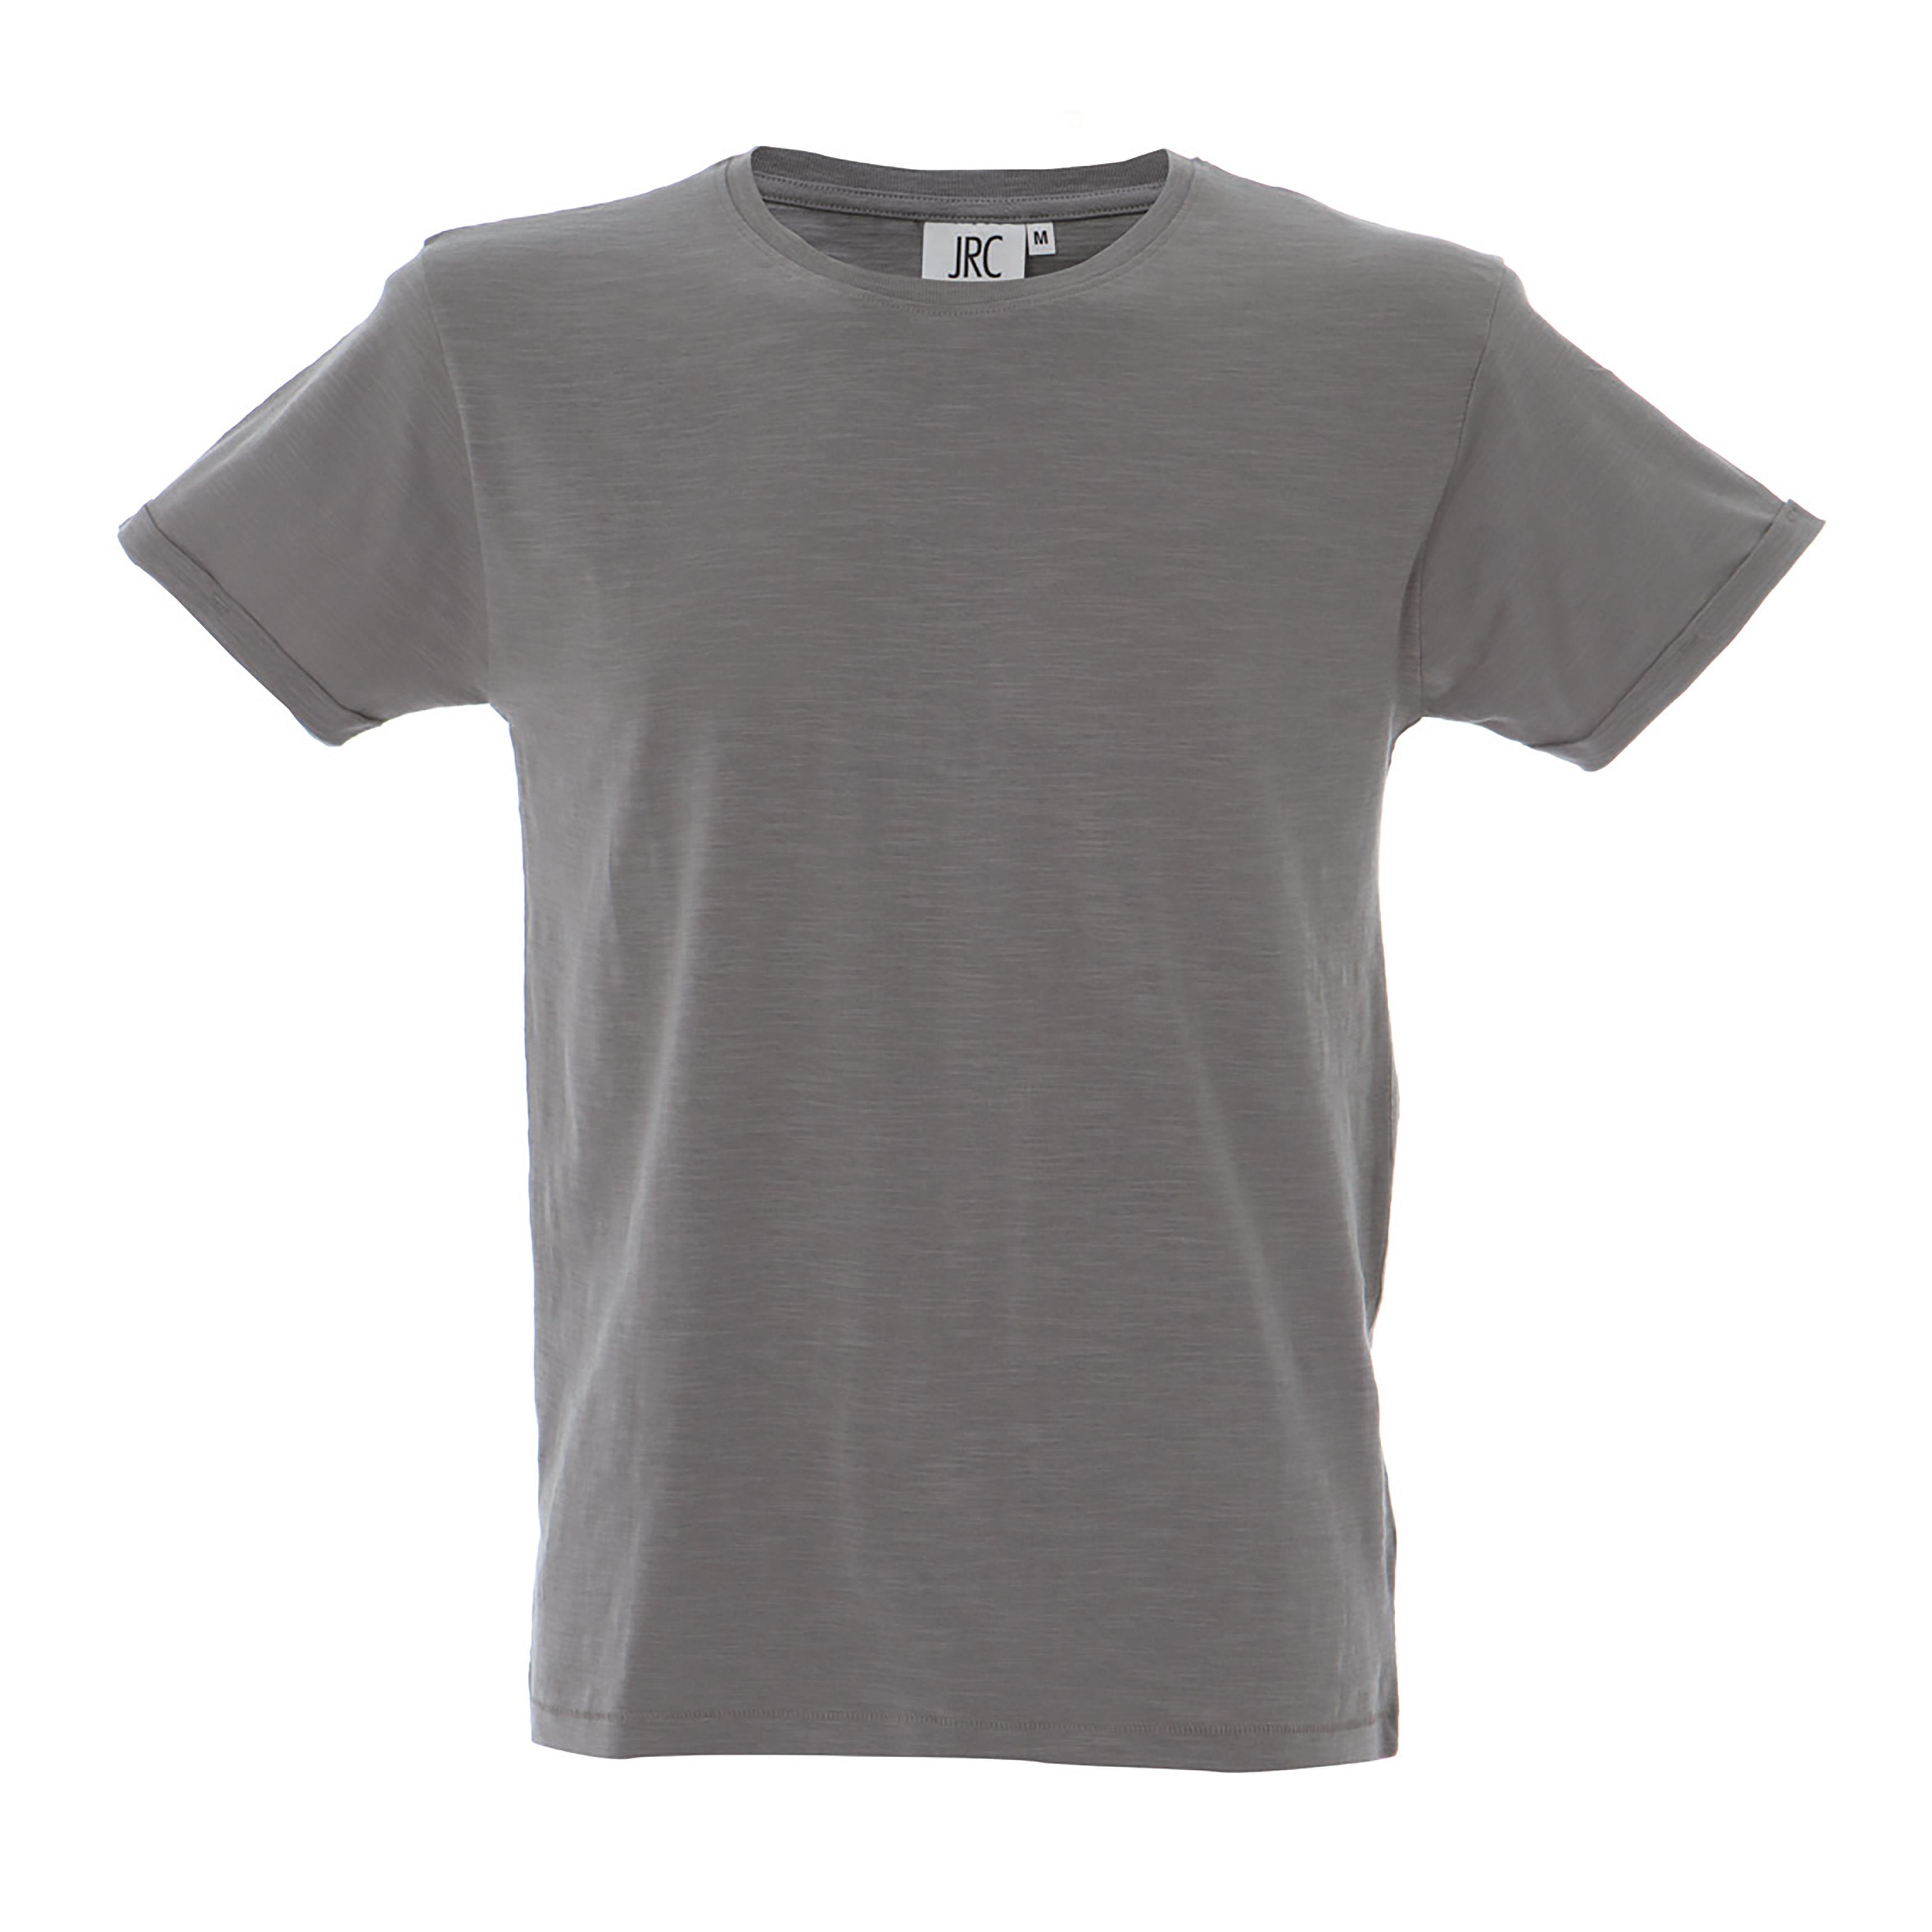 T-Shirt Perth Man James Ross 99004, qualit e versatilit